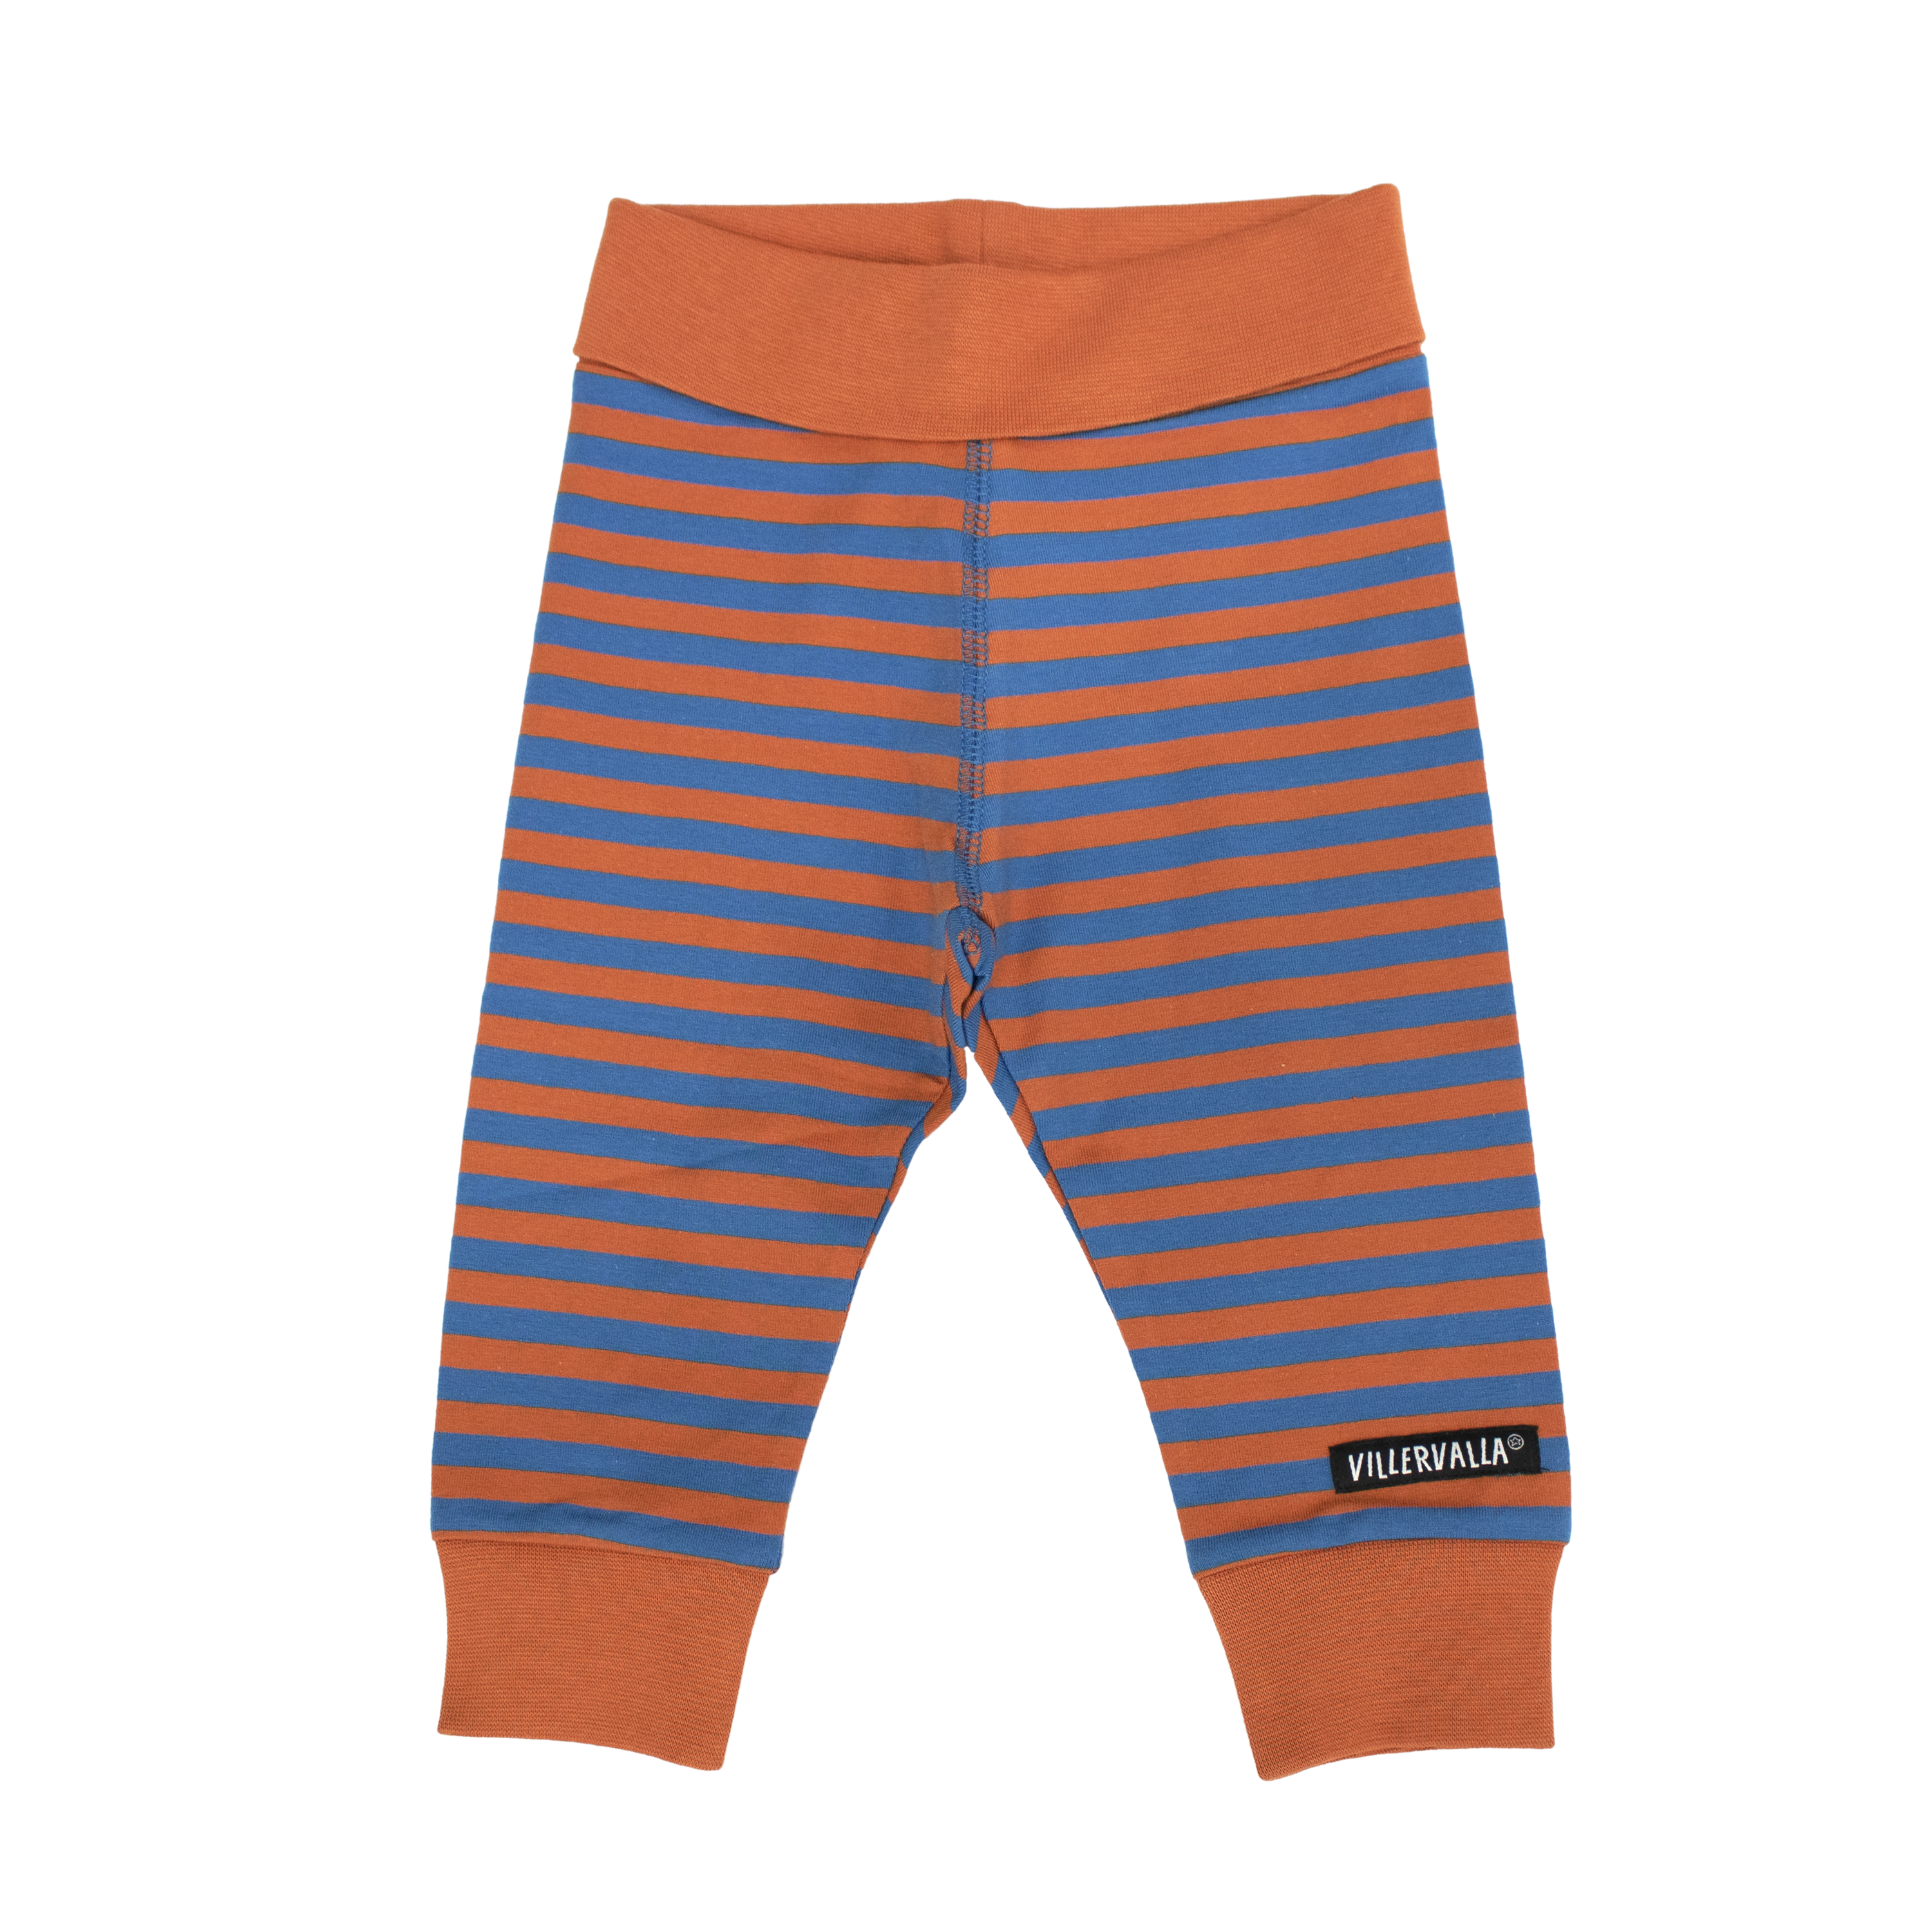 Villervalla - Comfy Pants - Stripes - Marine/Spice